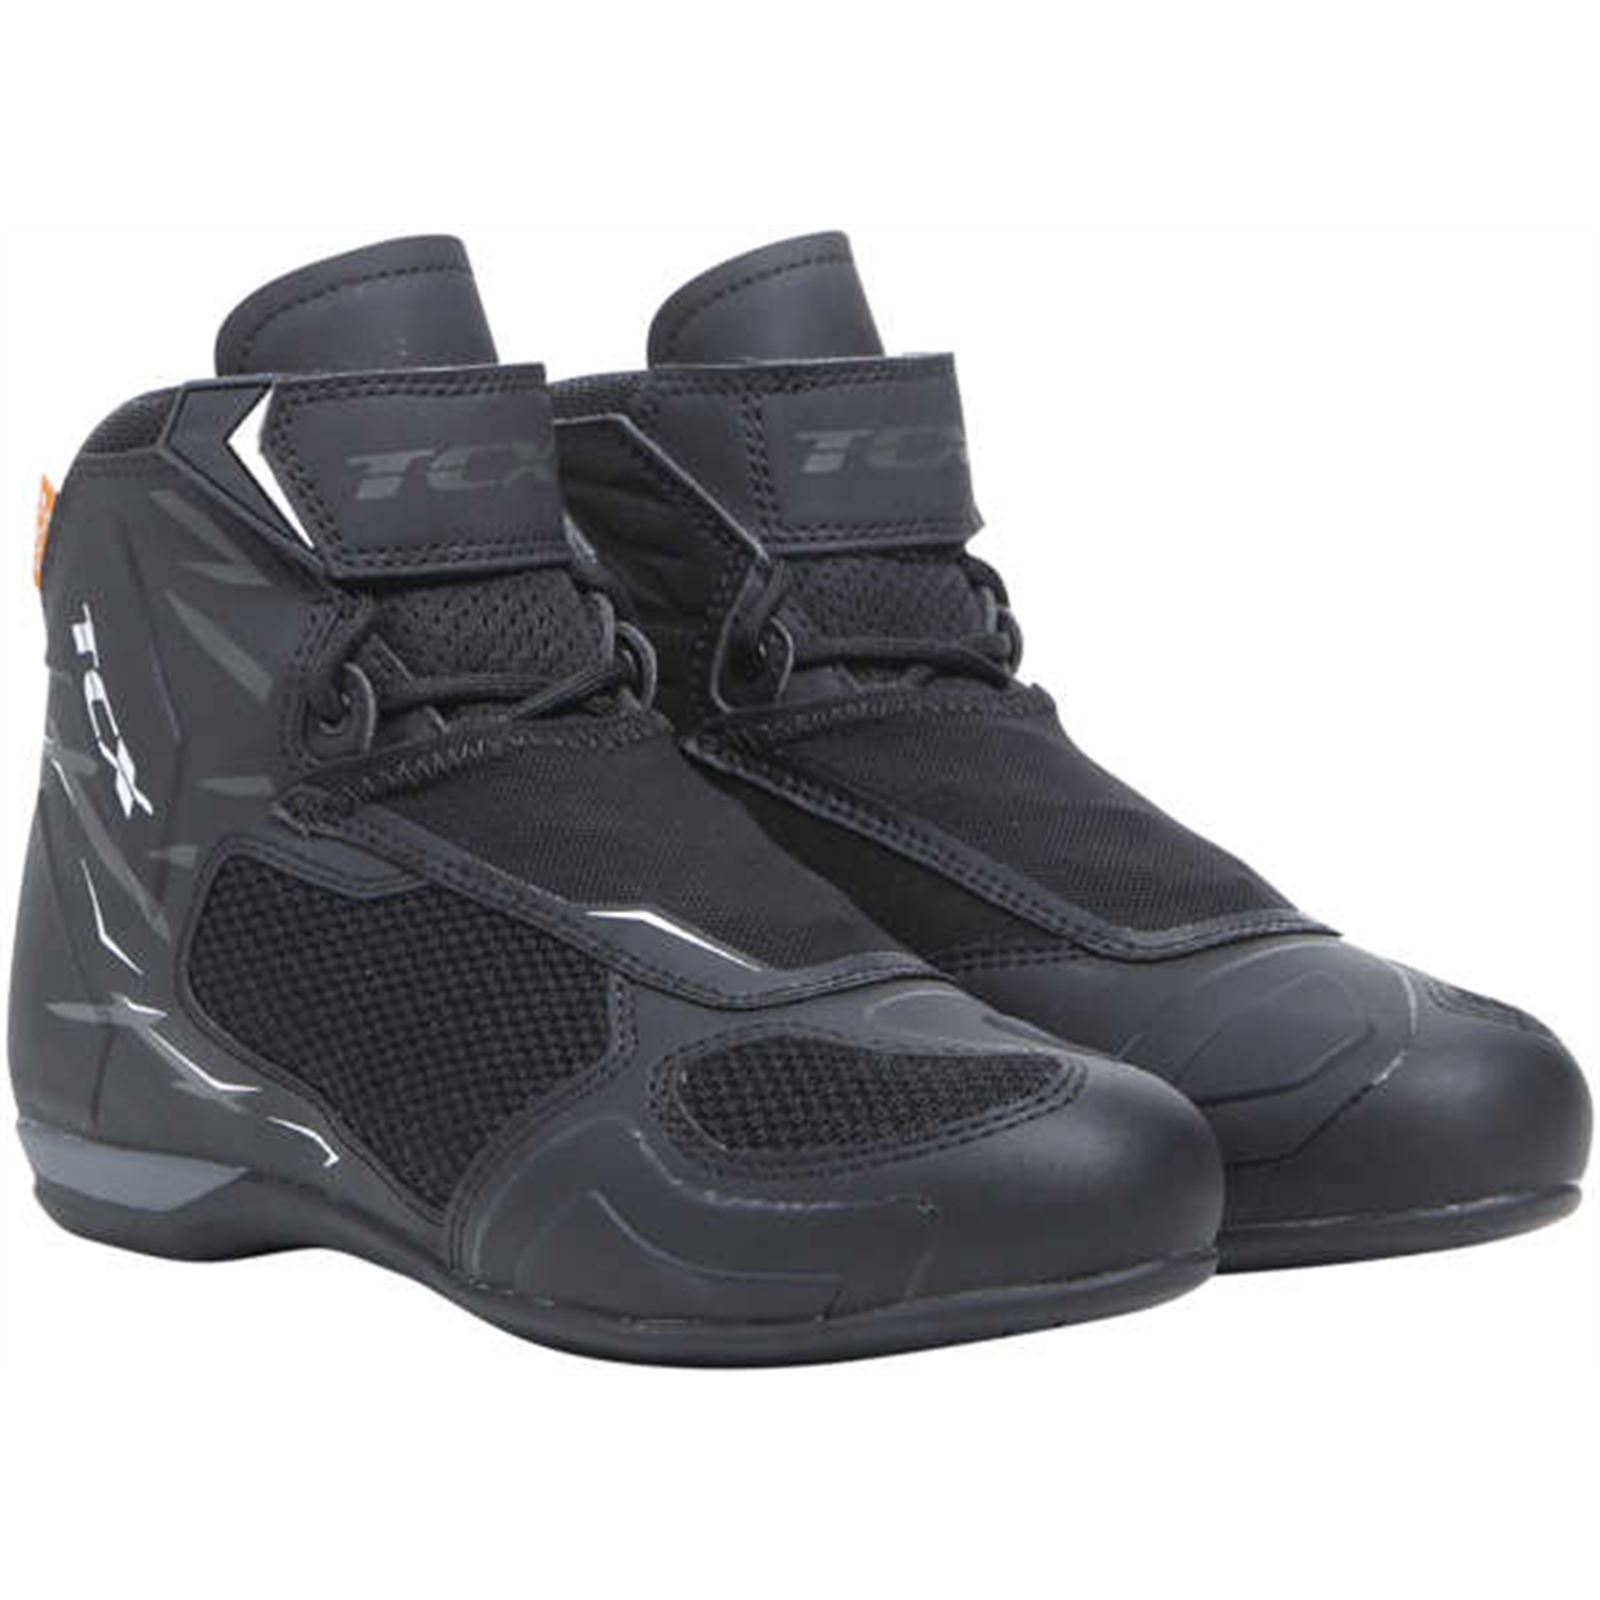 TCX Women's RO4D Air Boots - Black/White - US Size 7